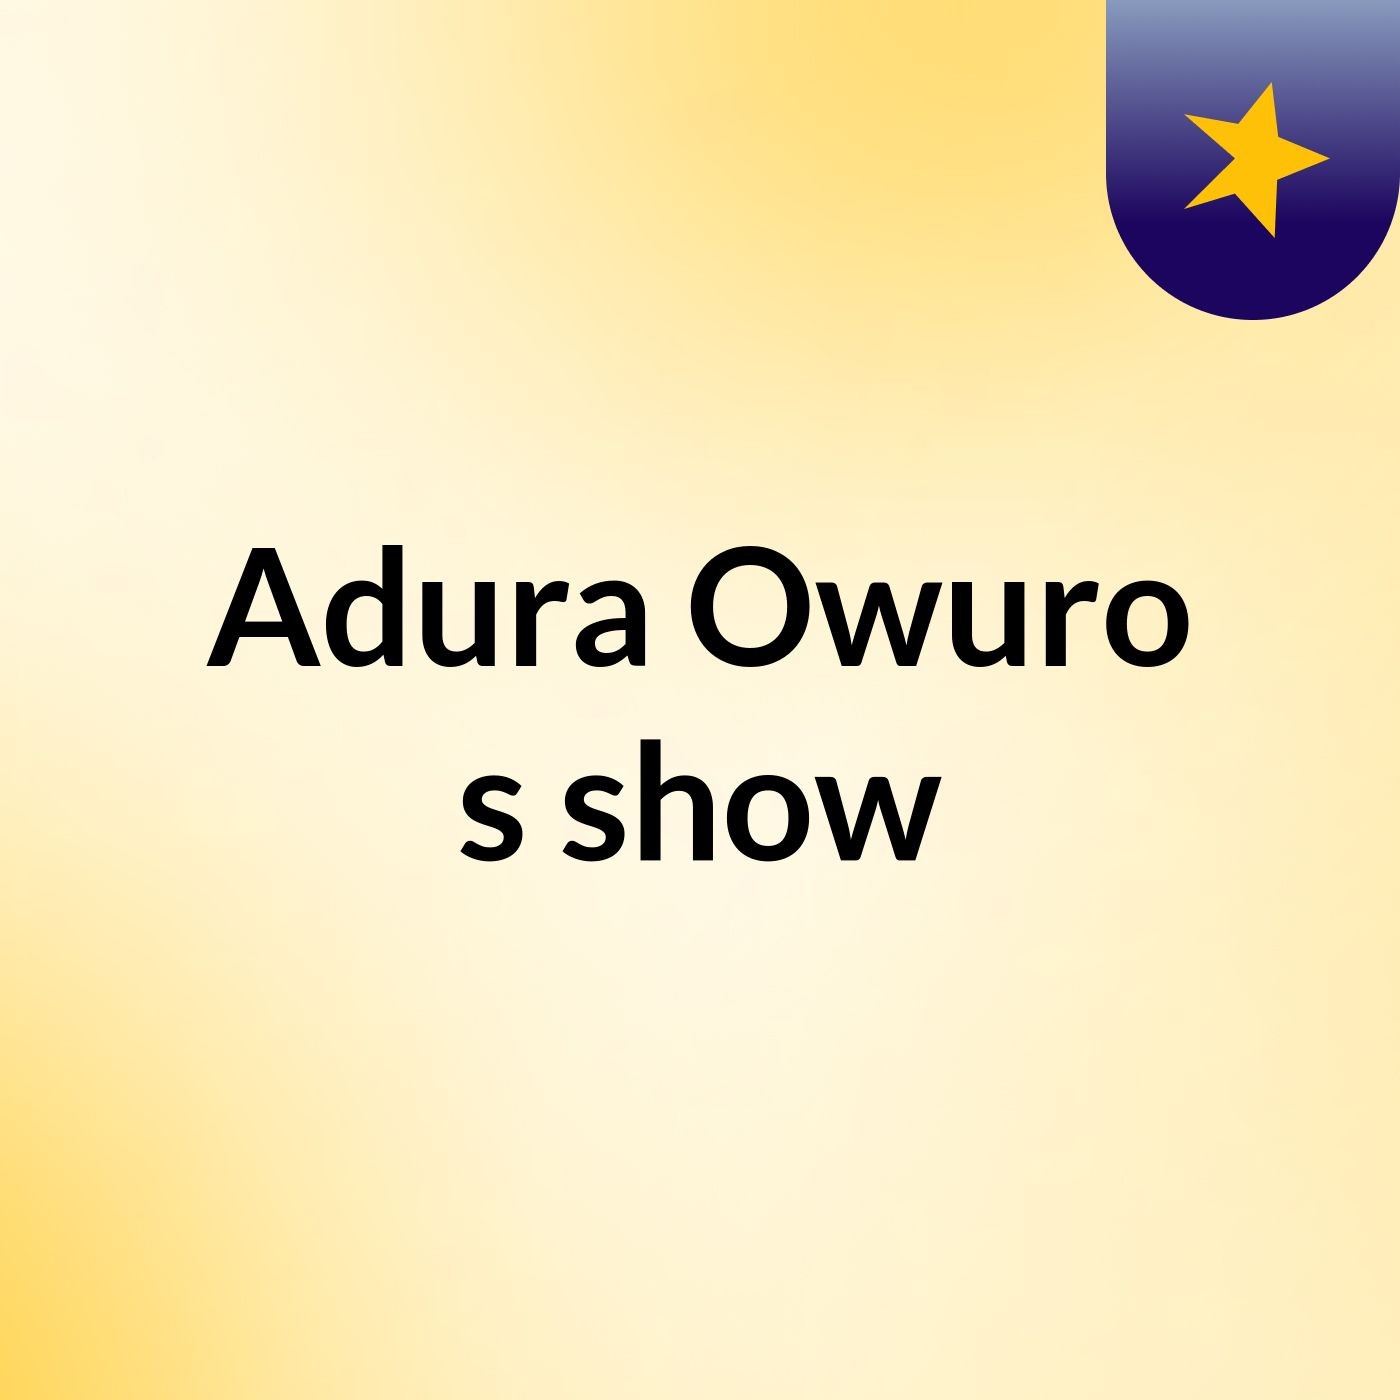 Episode 3 - Adura Owuro's show